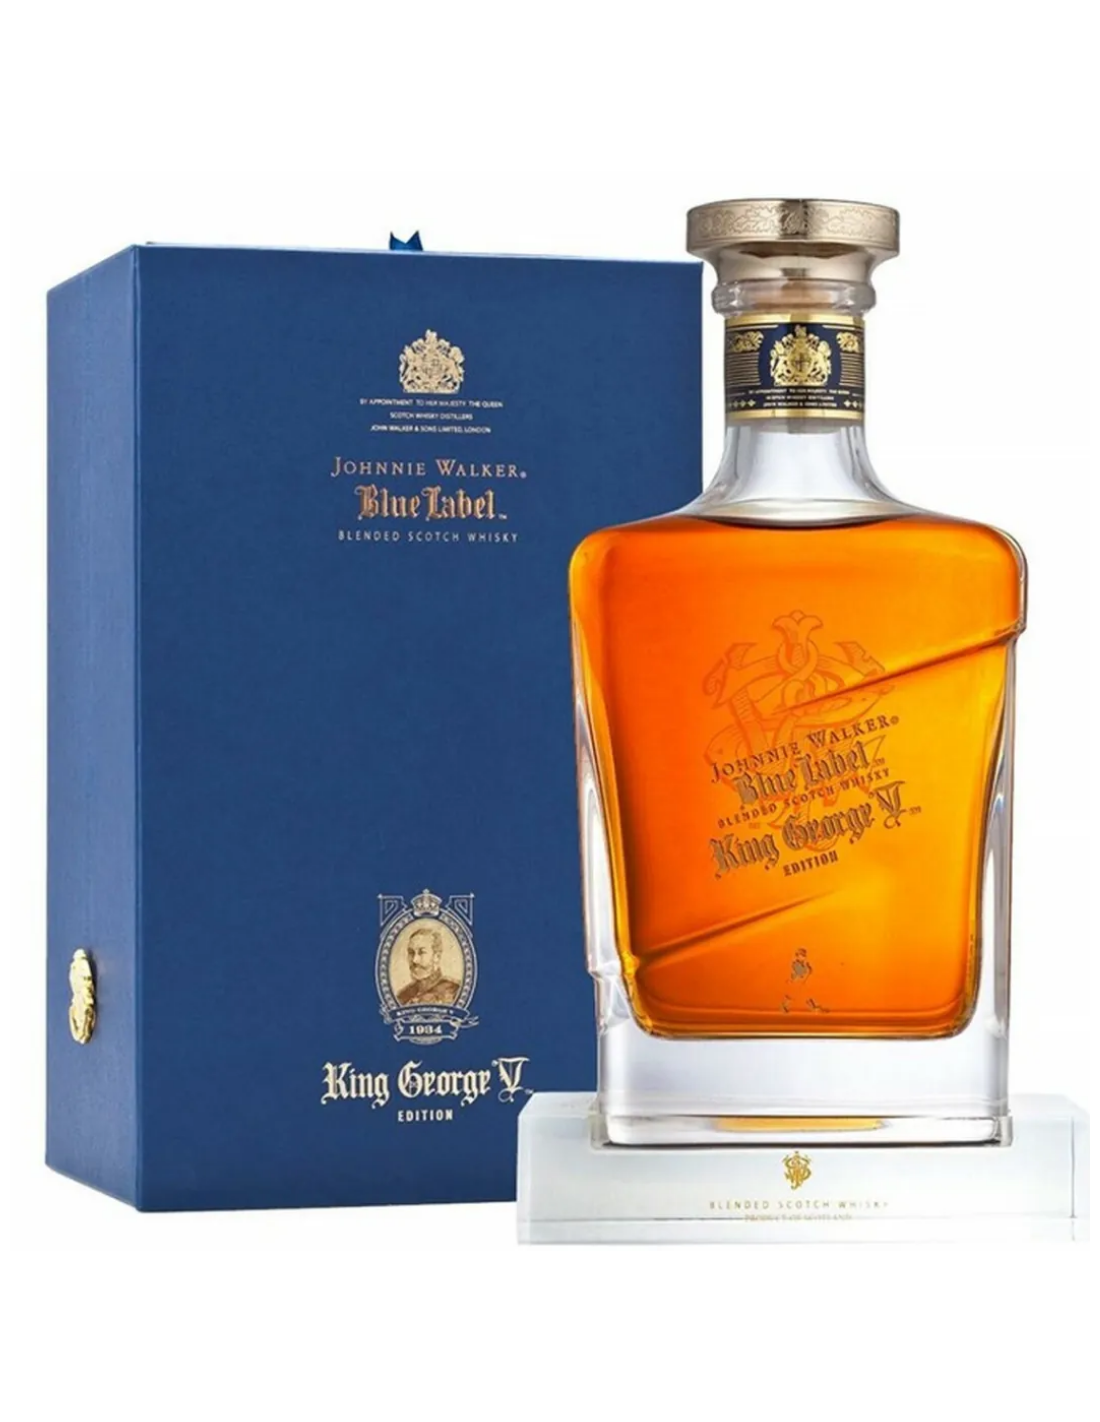 Whisky Johnnie Walker Blue Label King George V, 0.7L, 43% alc., Marea Britanie alcooldiscount.ro